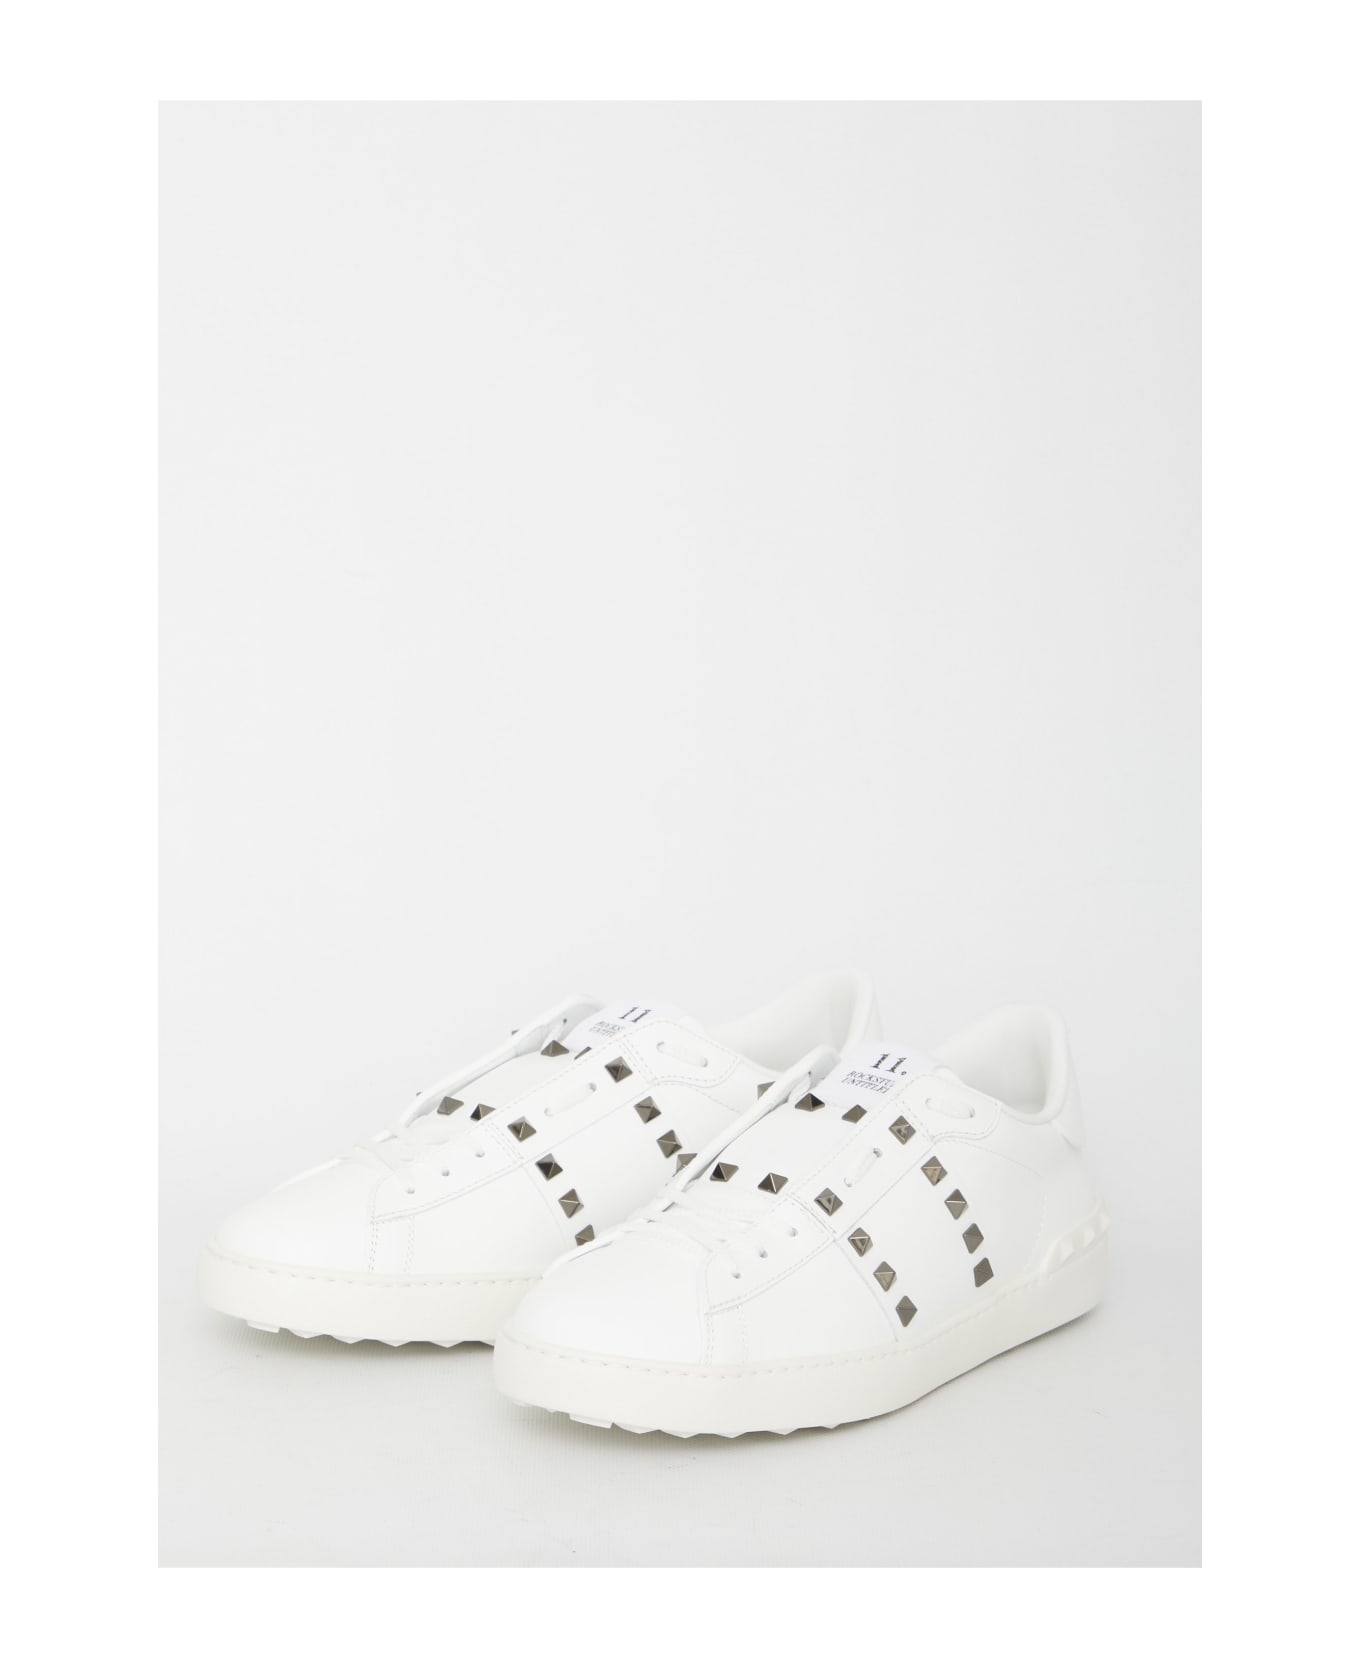 Valentino Garavani Rockstud Untitled Sneakers - White